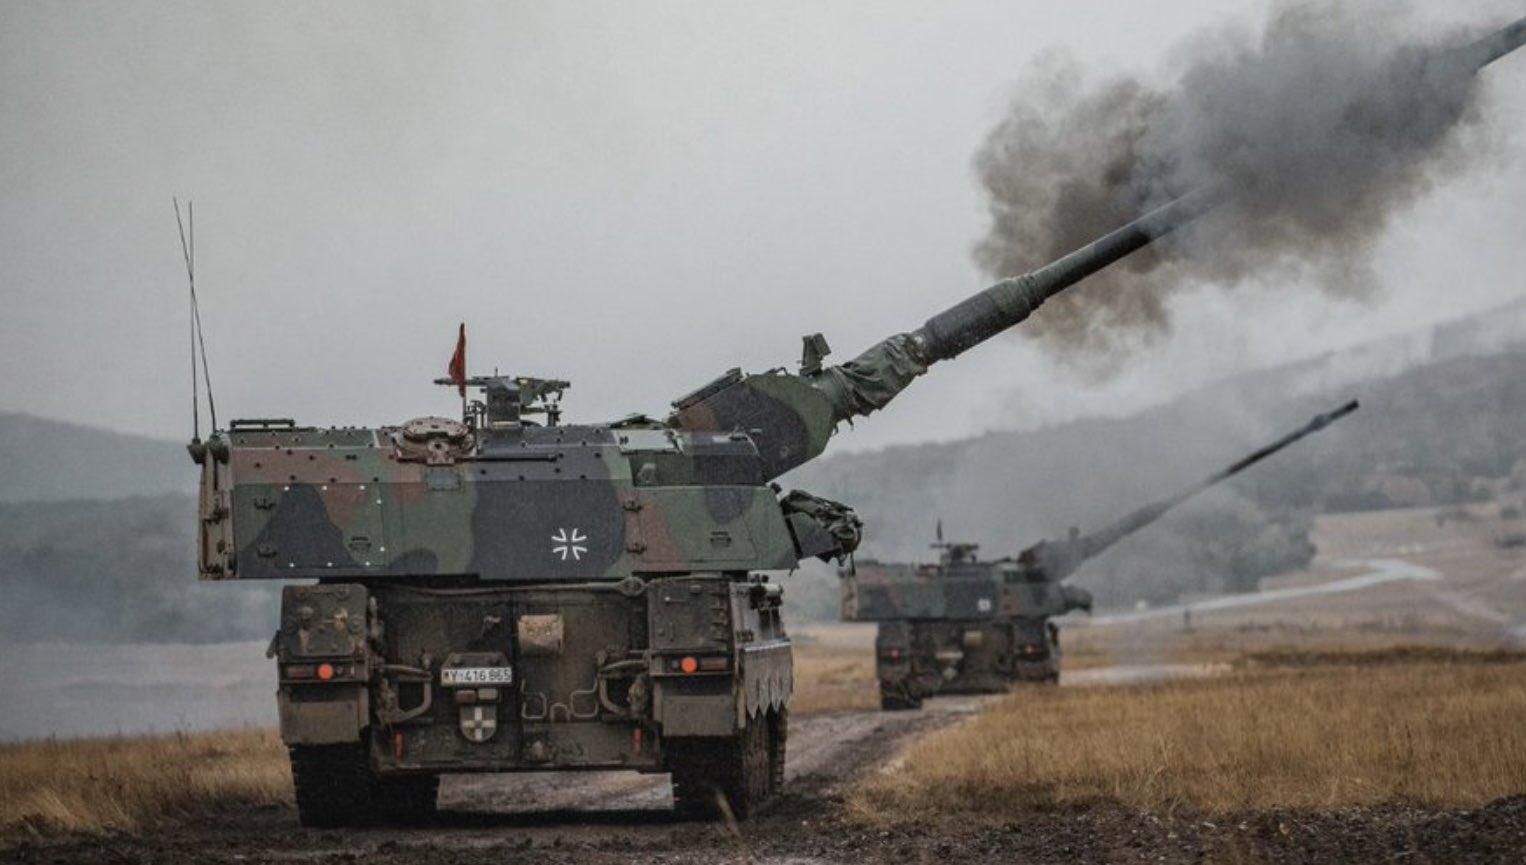 German self-propelled howitzers have "finally" arrived in Ukraine - en